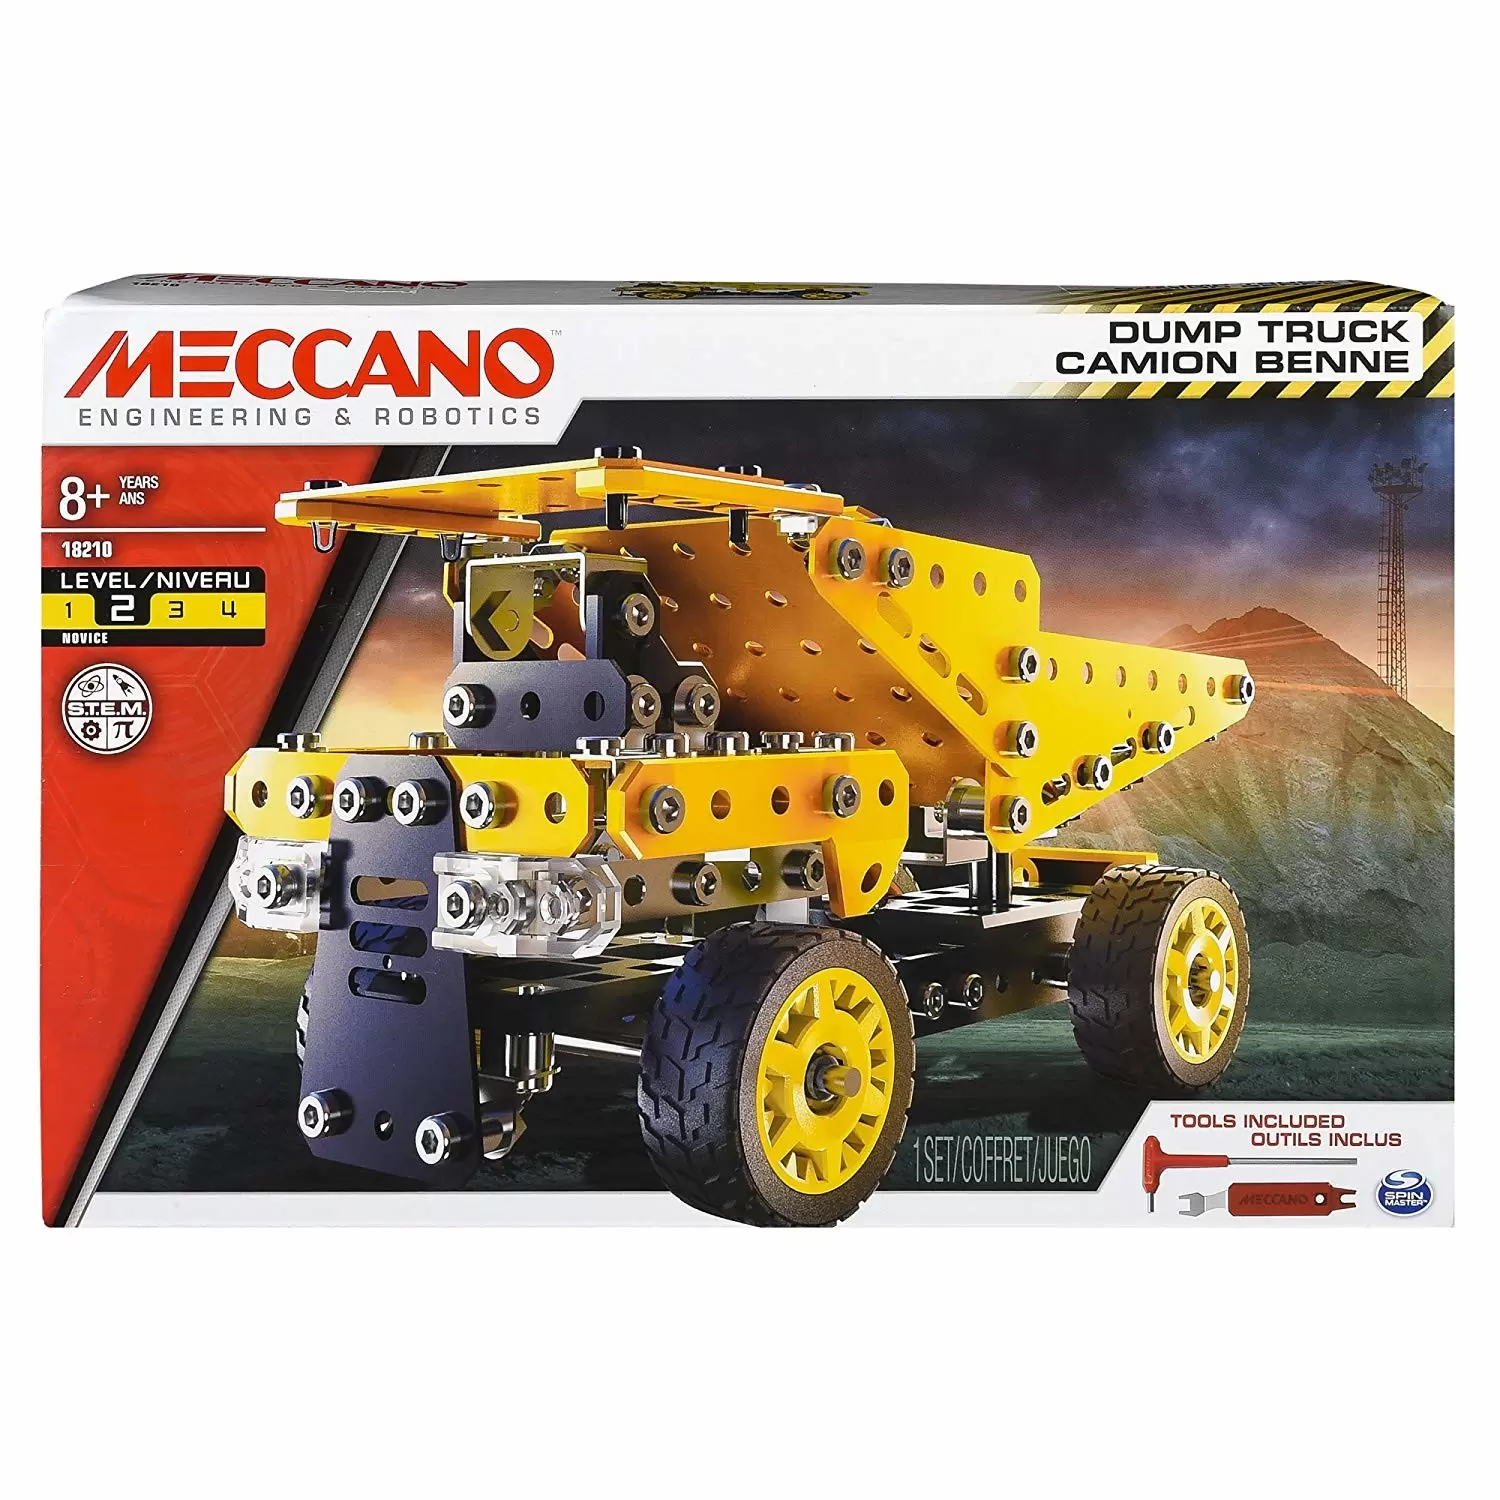 Meccano - Camion Benne